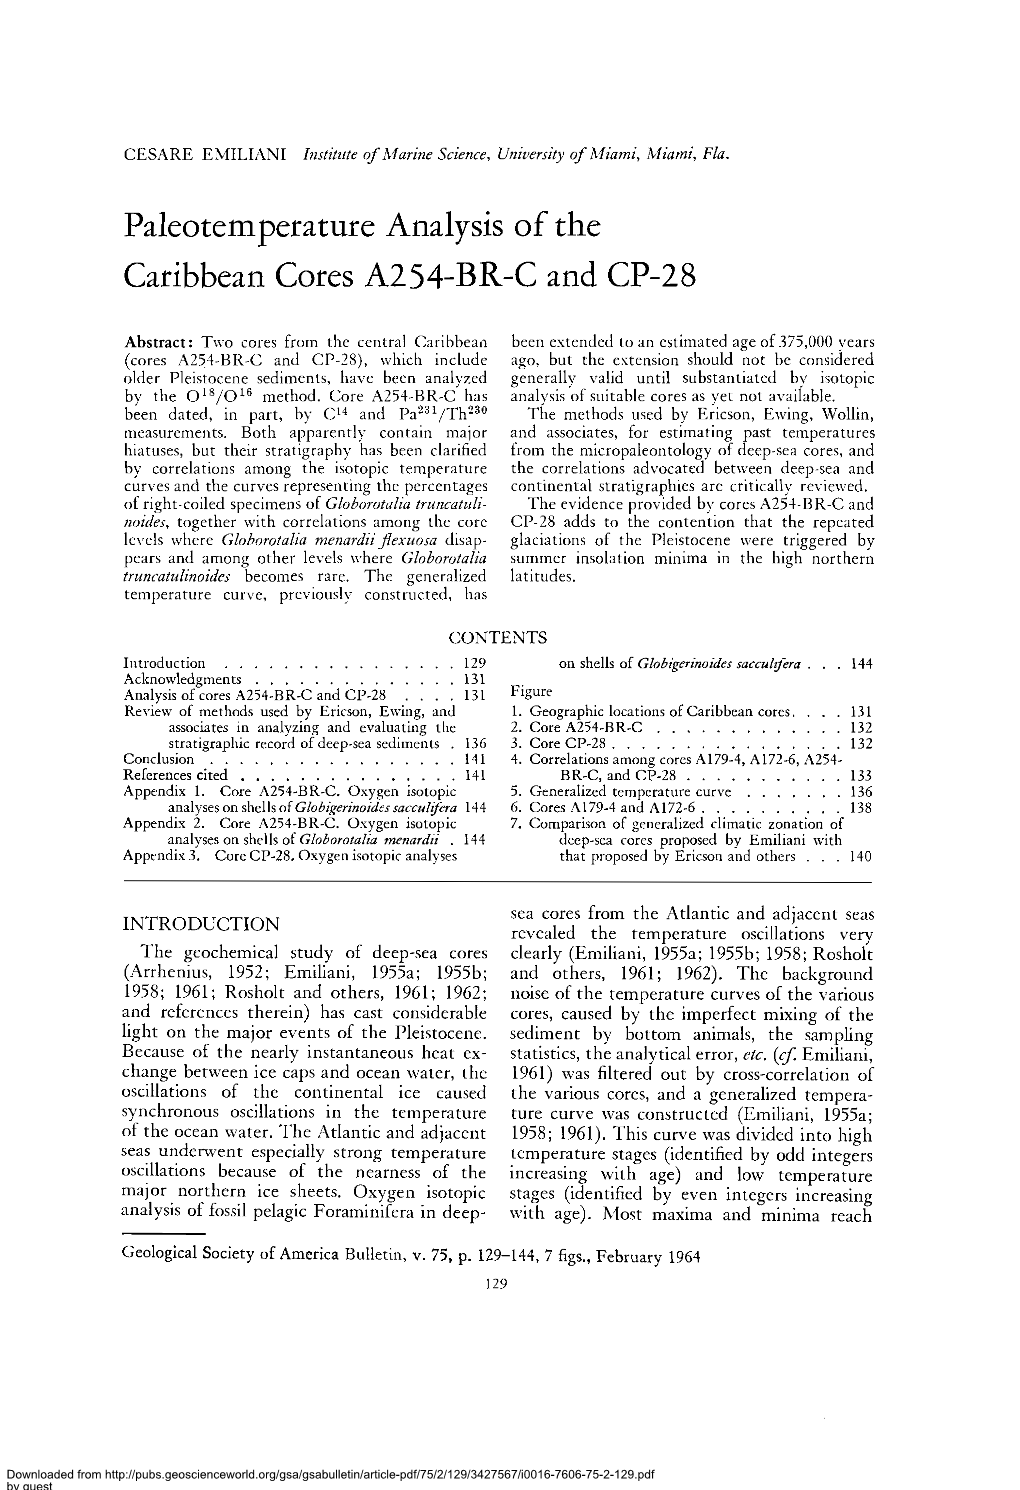 CESARE EMILIANI Institute of Marine Science, University of Miami, Miami, Fla. Paleotemperature Analysis of the Caribbean Cores A